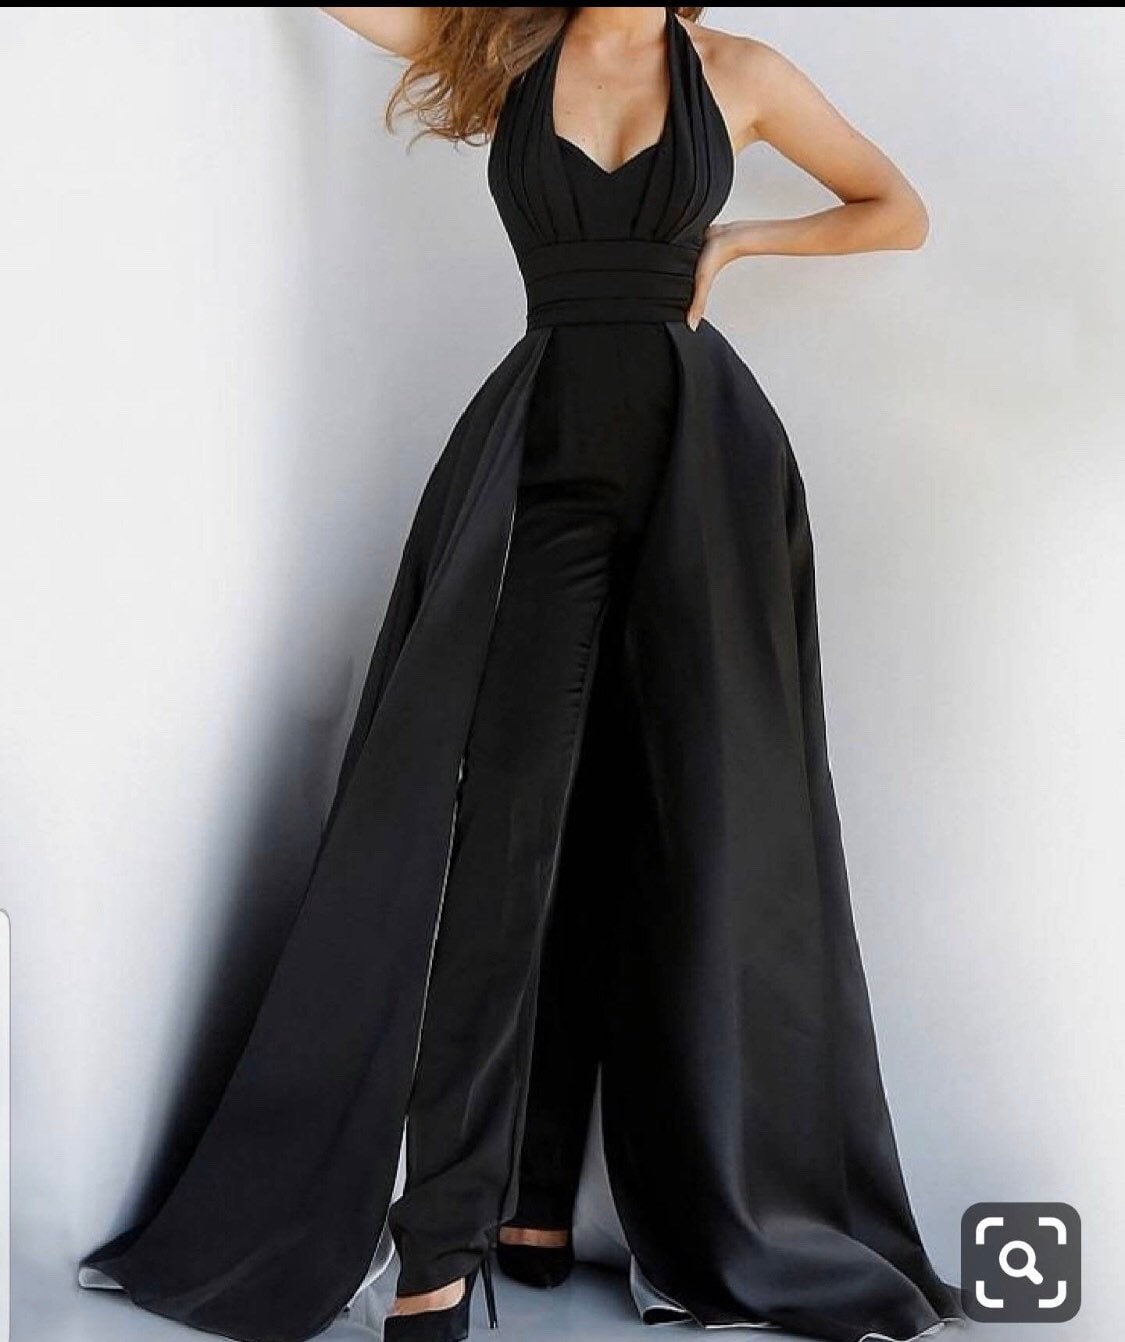 Black bridal jumpsuit with train black reception | Etsy